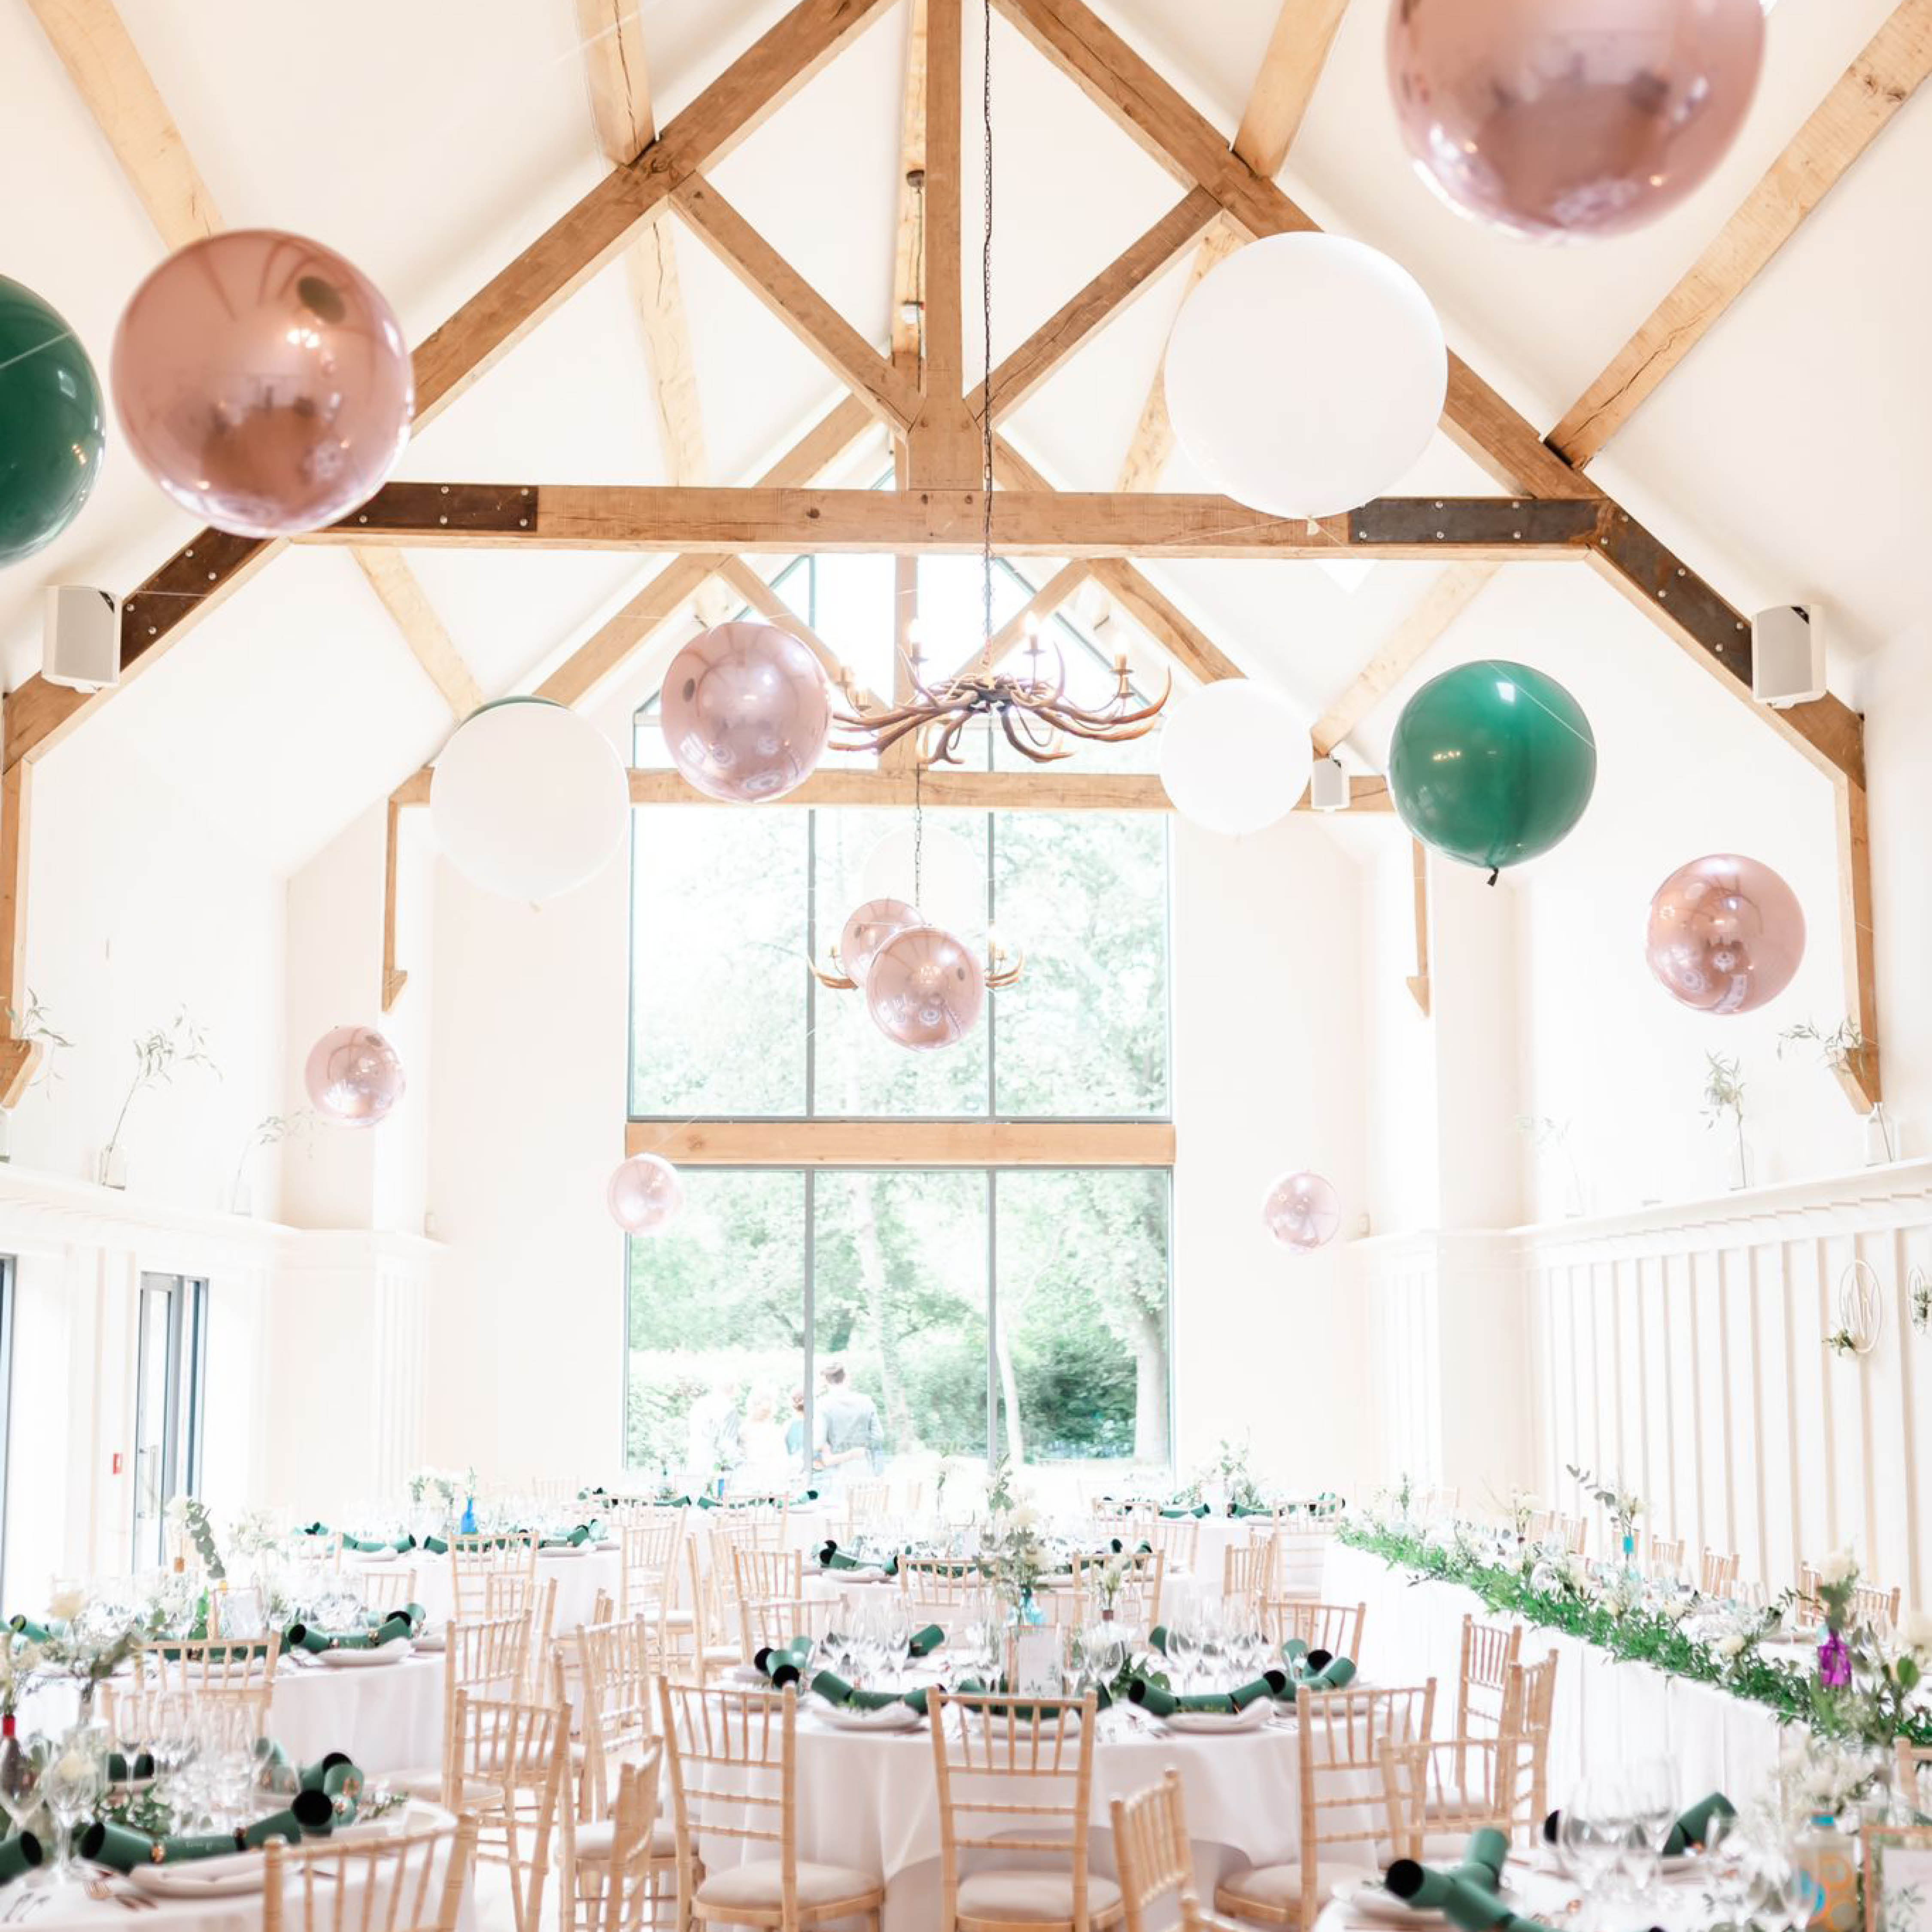 Wedding decorations with balloons, wedding balloons barn venue